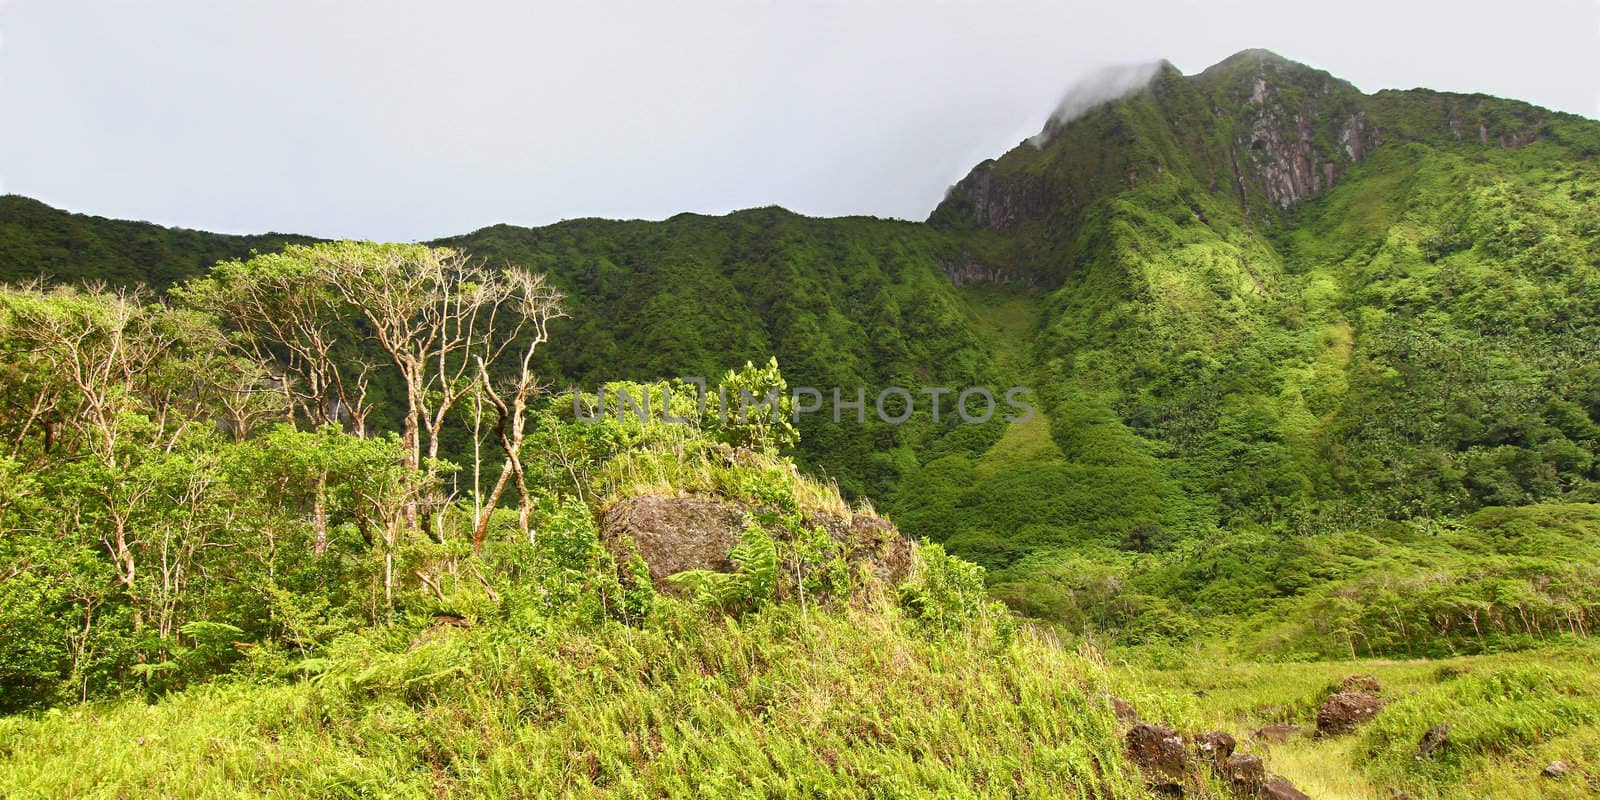 Mount Liamuiga - Saint Kitts by Wirepec